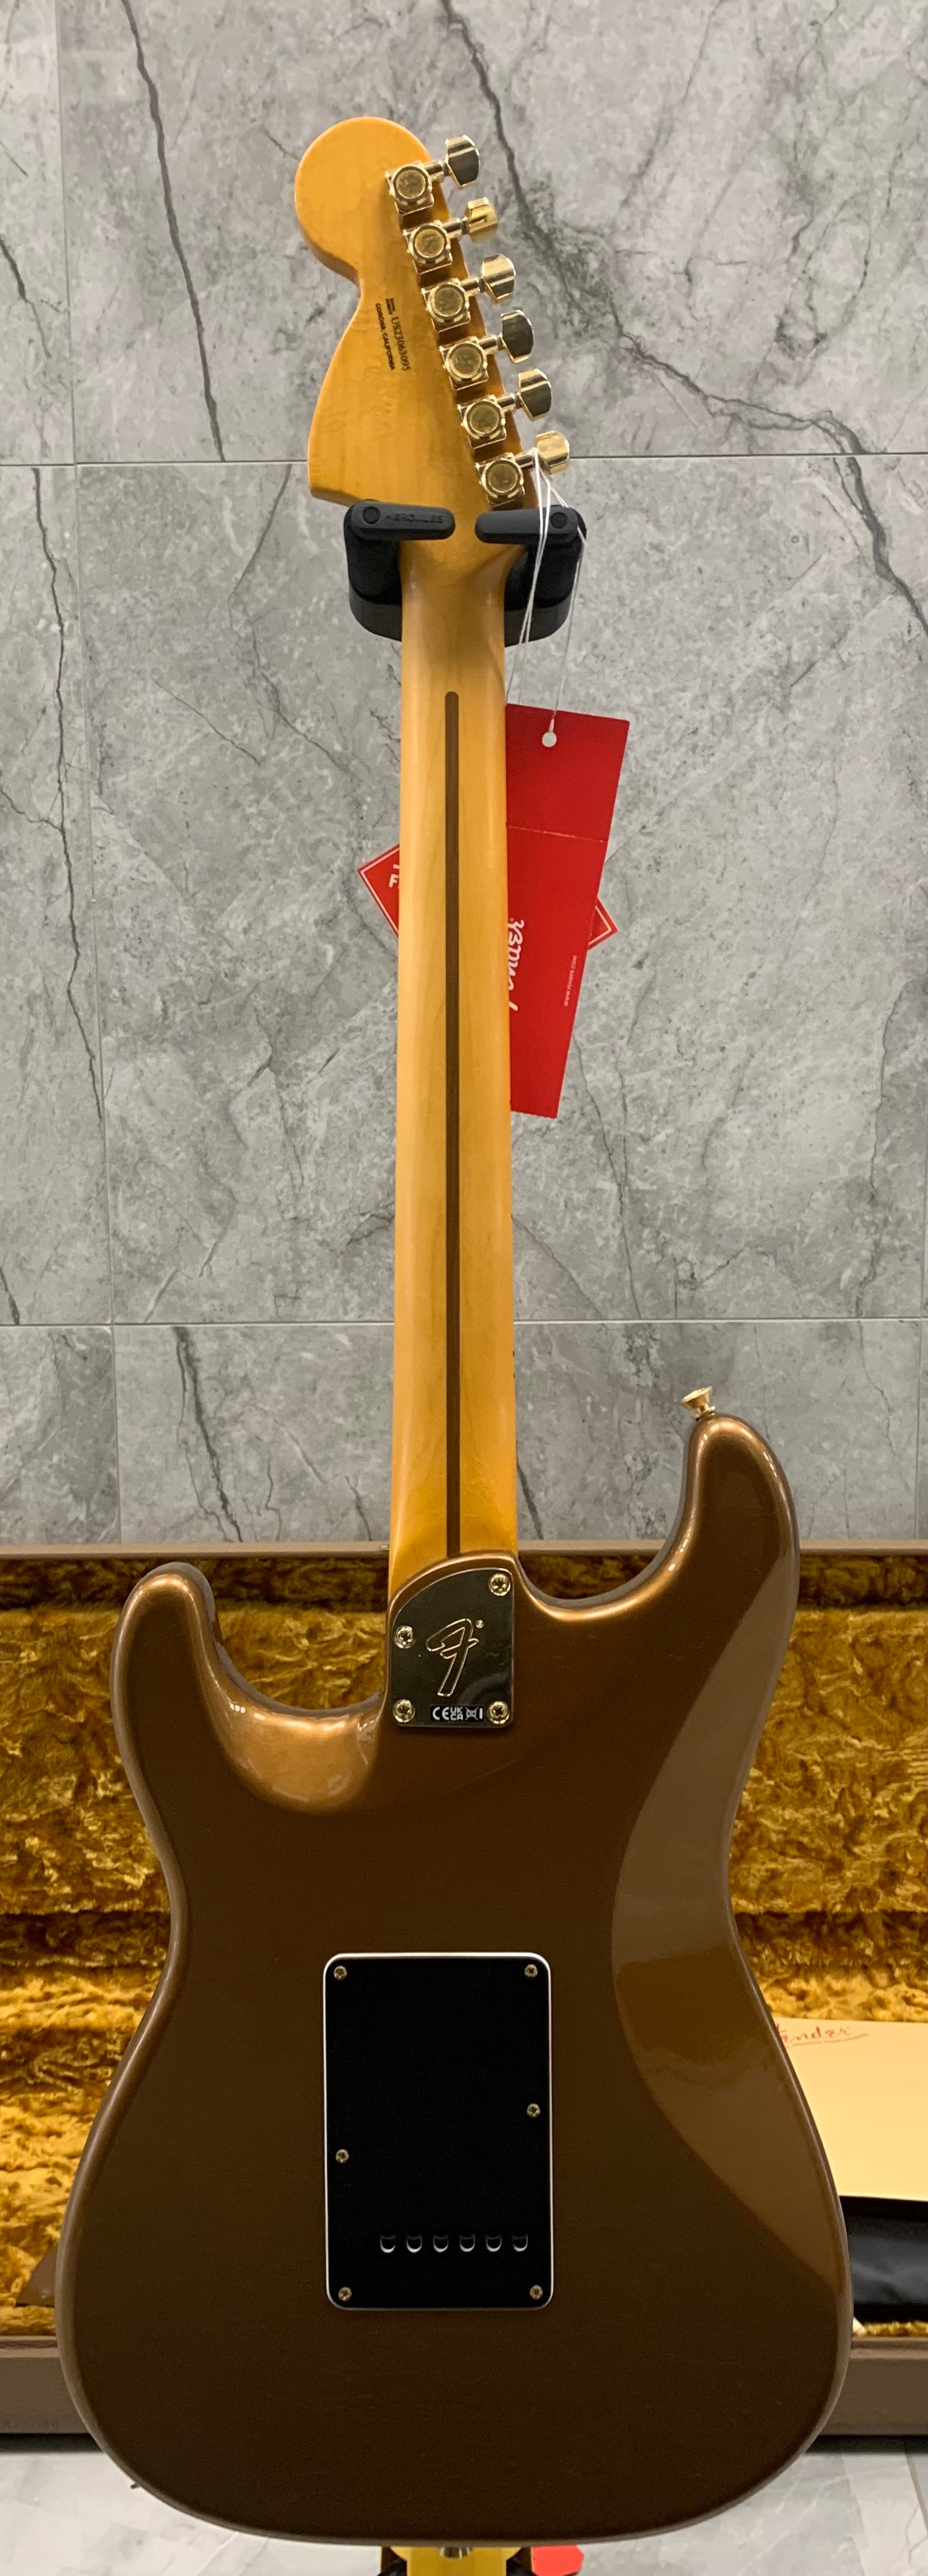 Fender USA Bruno Mars Stratocaster Maple Fingerboard, Mars Mocha 0116862877 SERIAL NUMBER US23063095 - 7.2 LBS